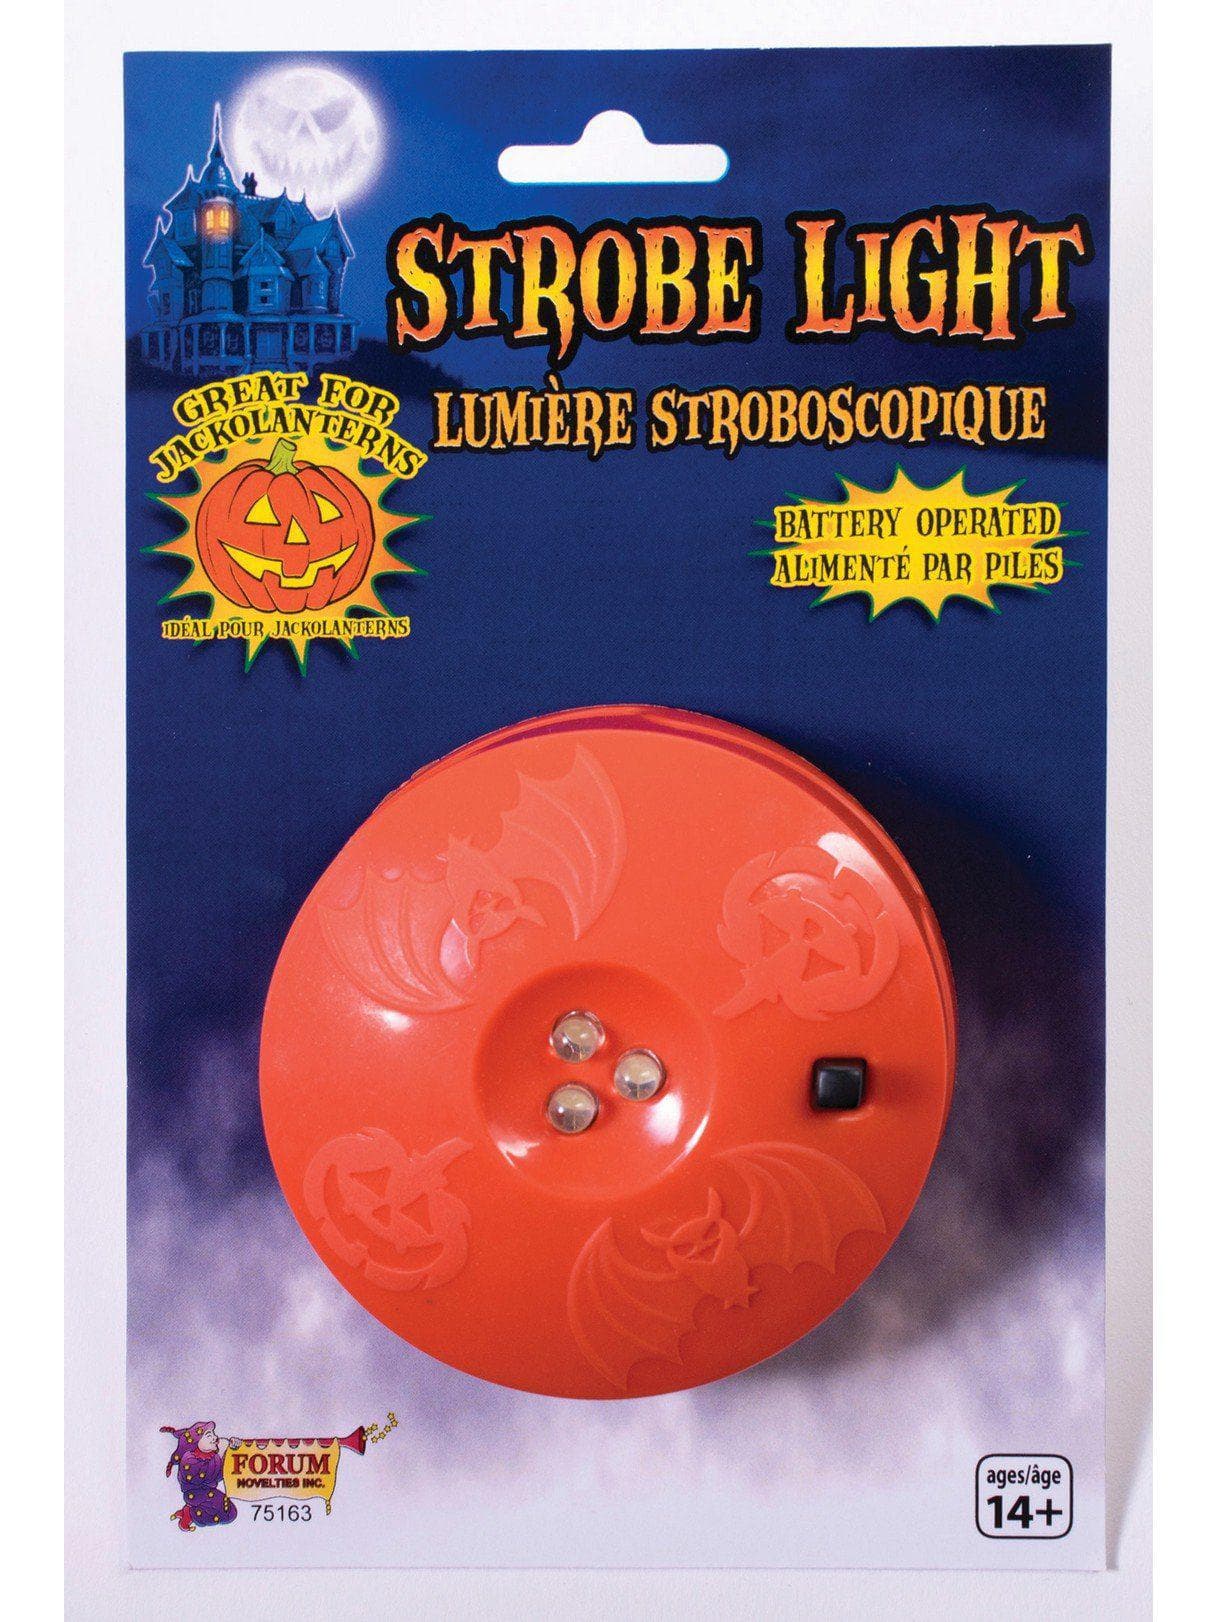 LED Strobe Light - costumes.com